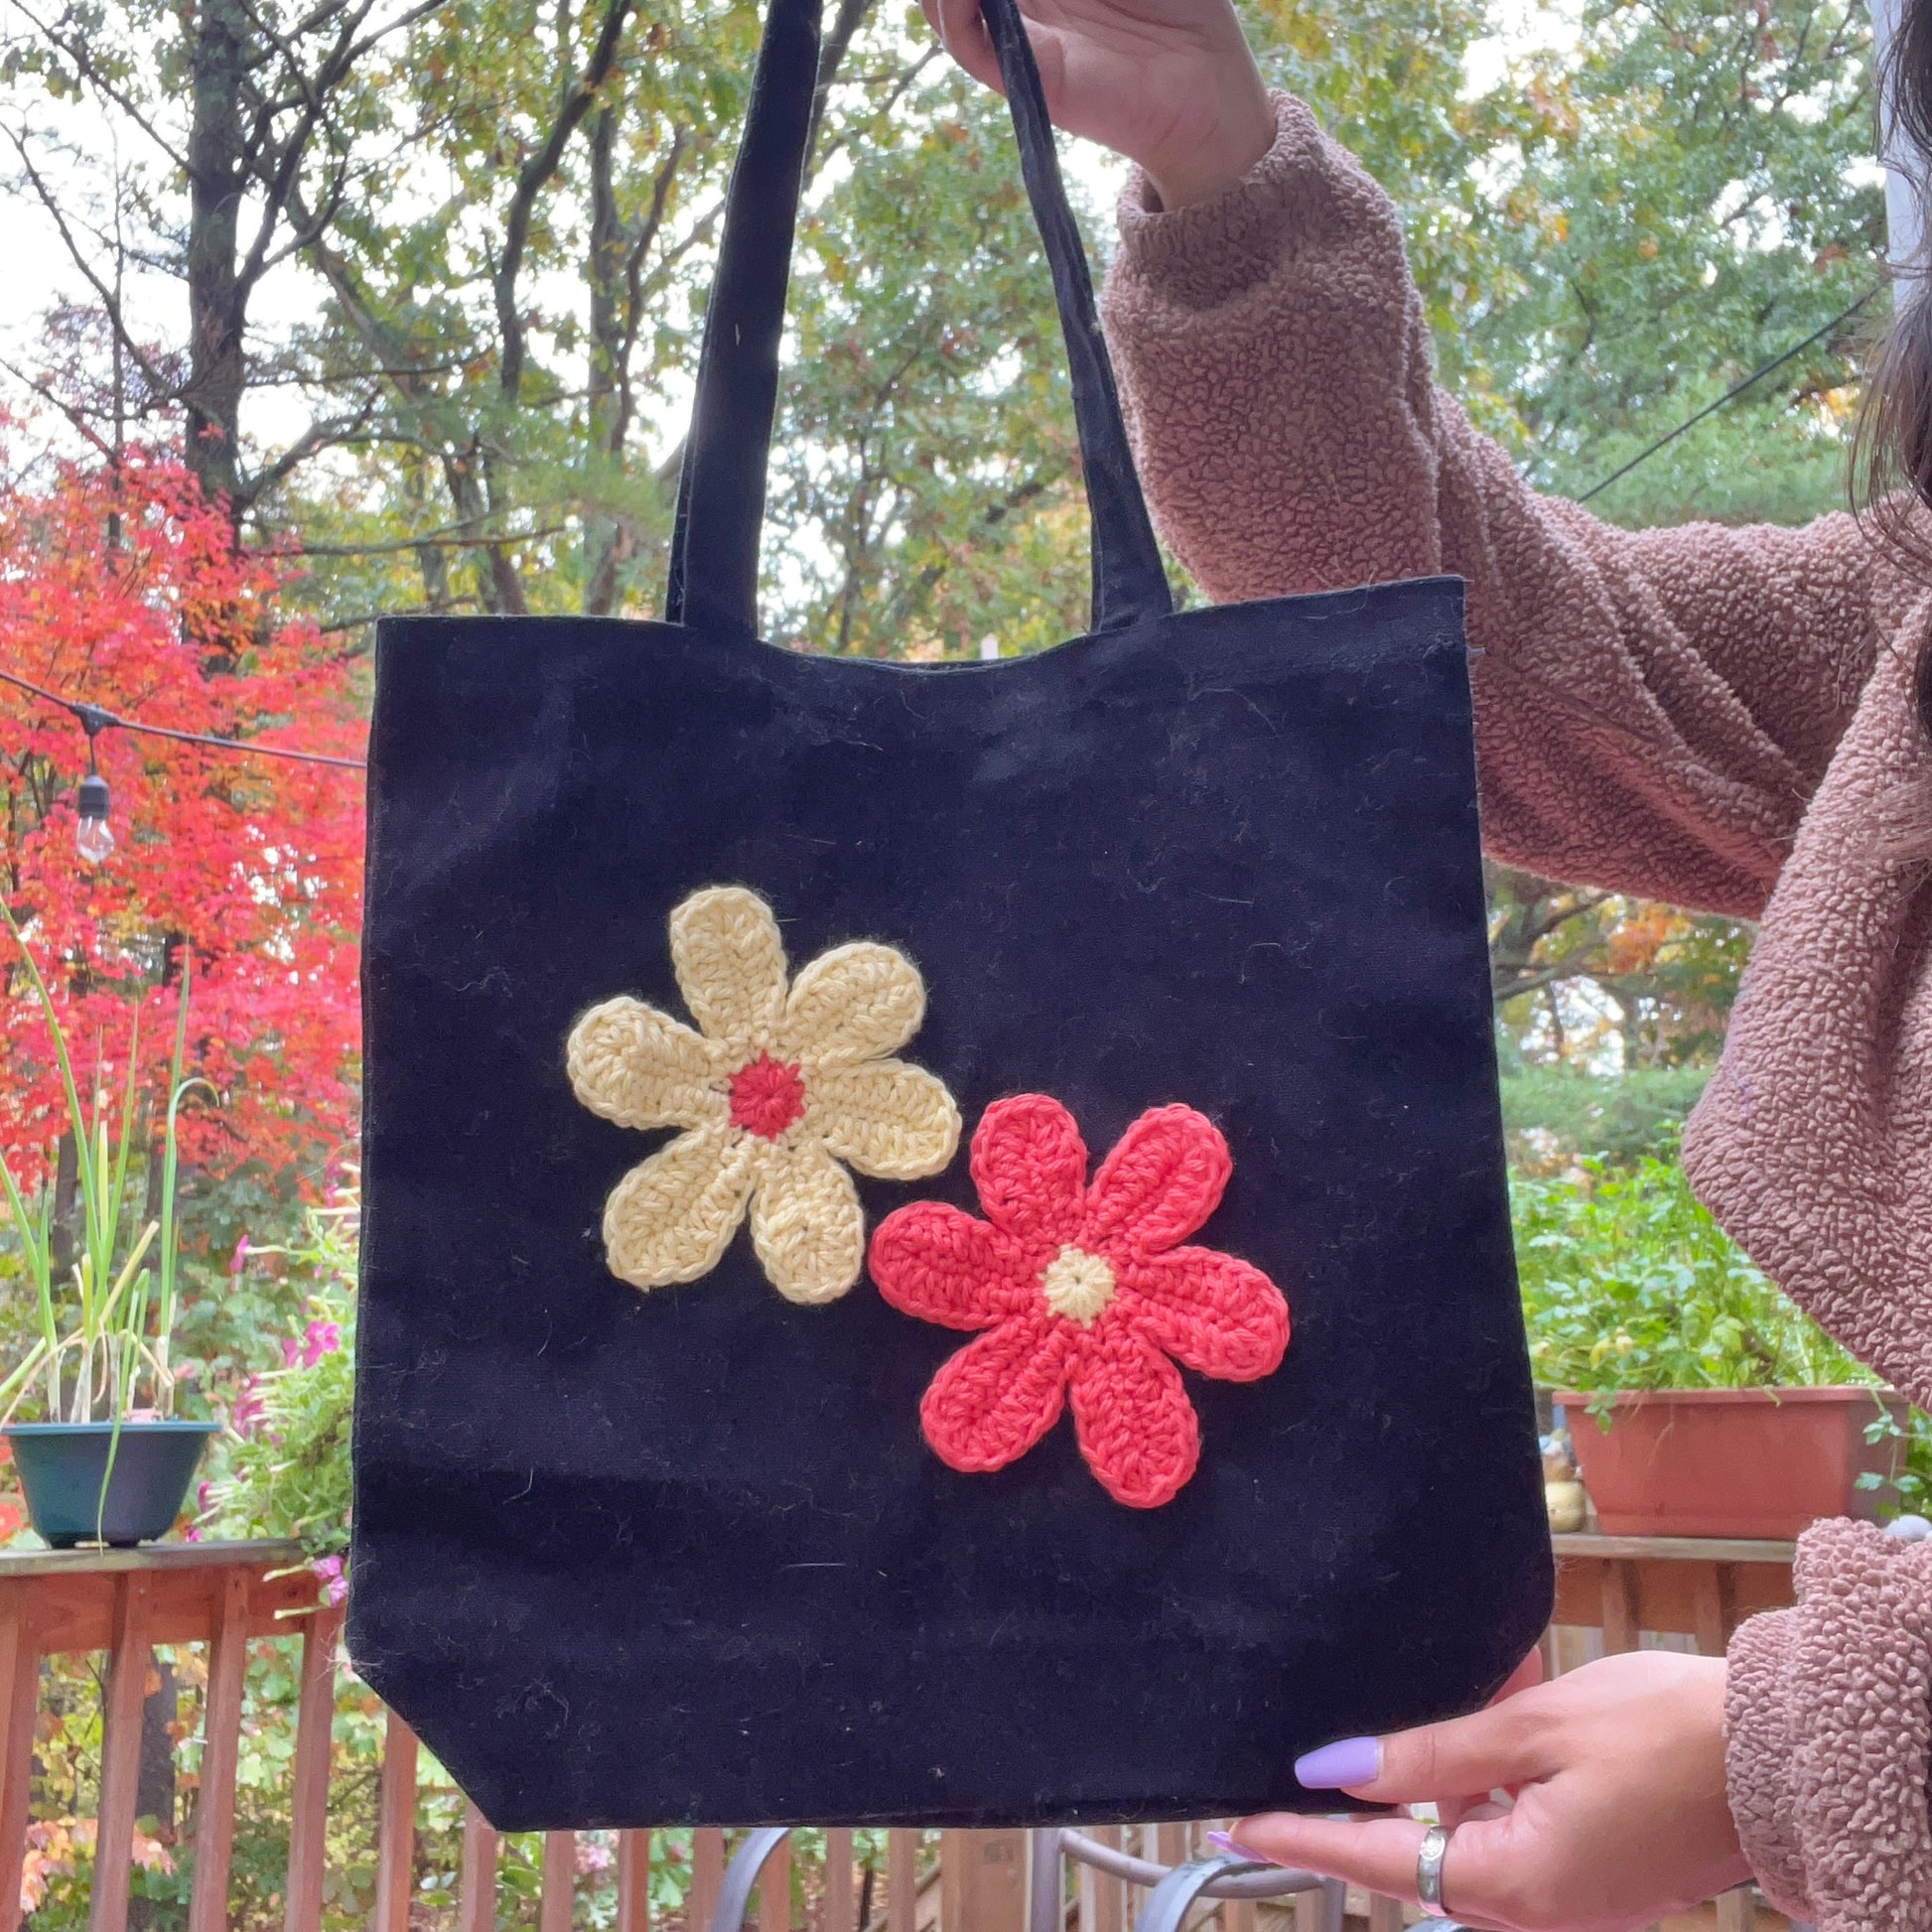 Handpainted Floral Tote Bag